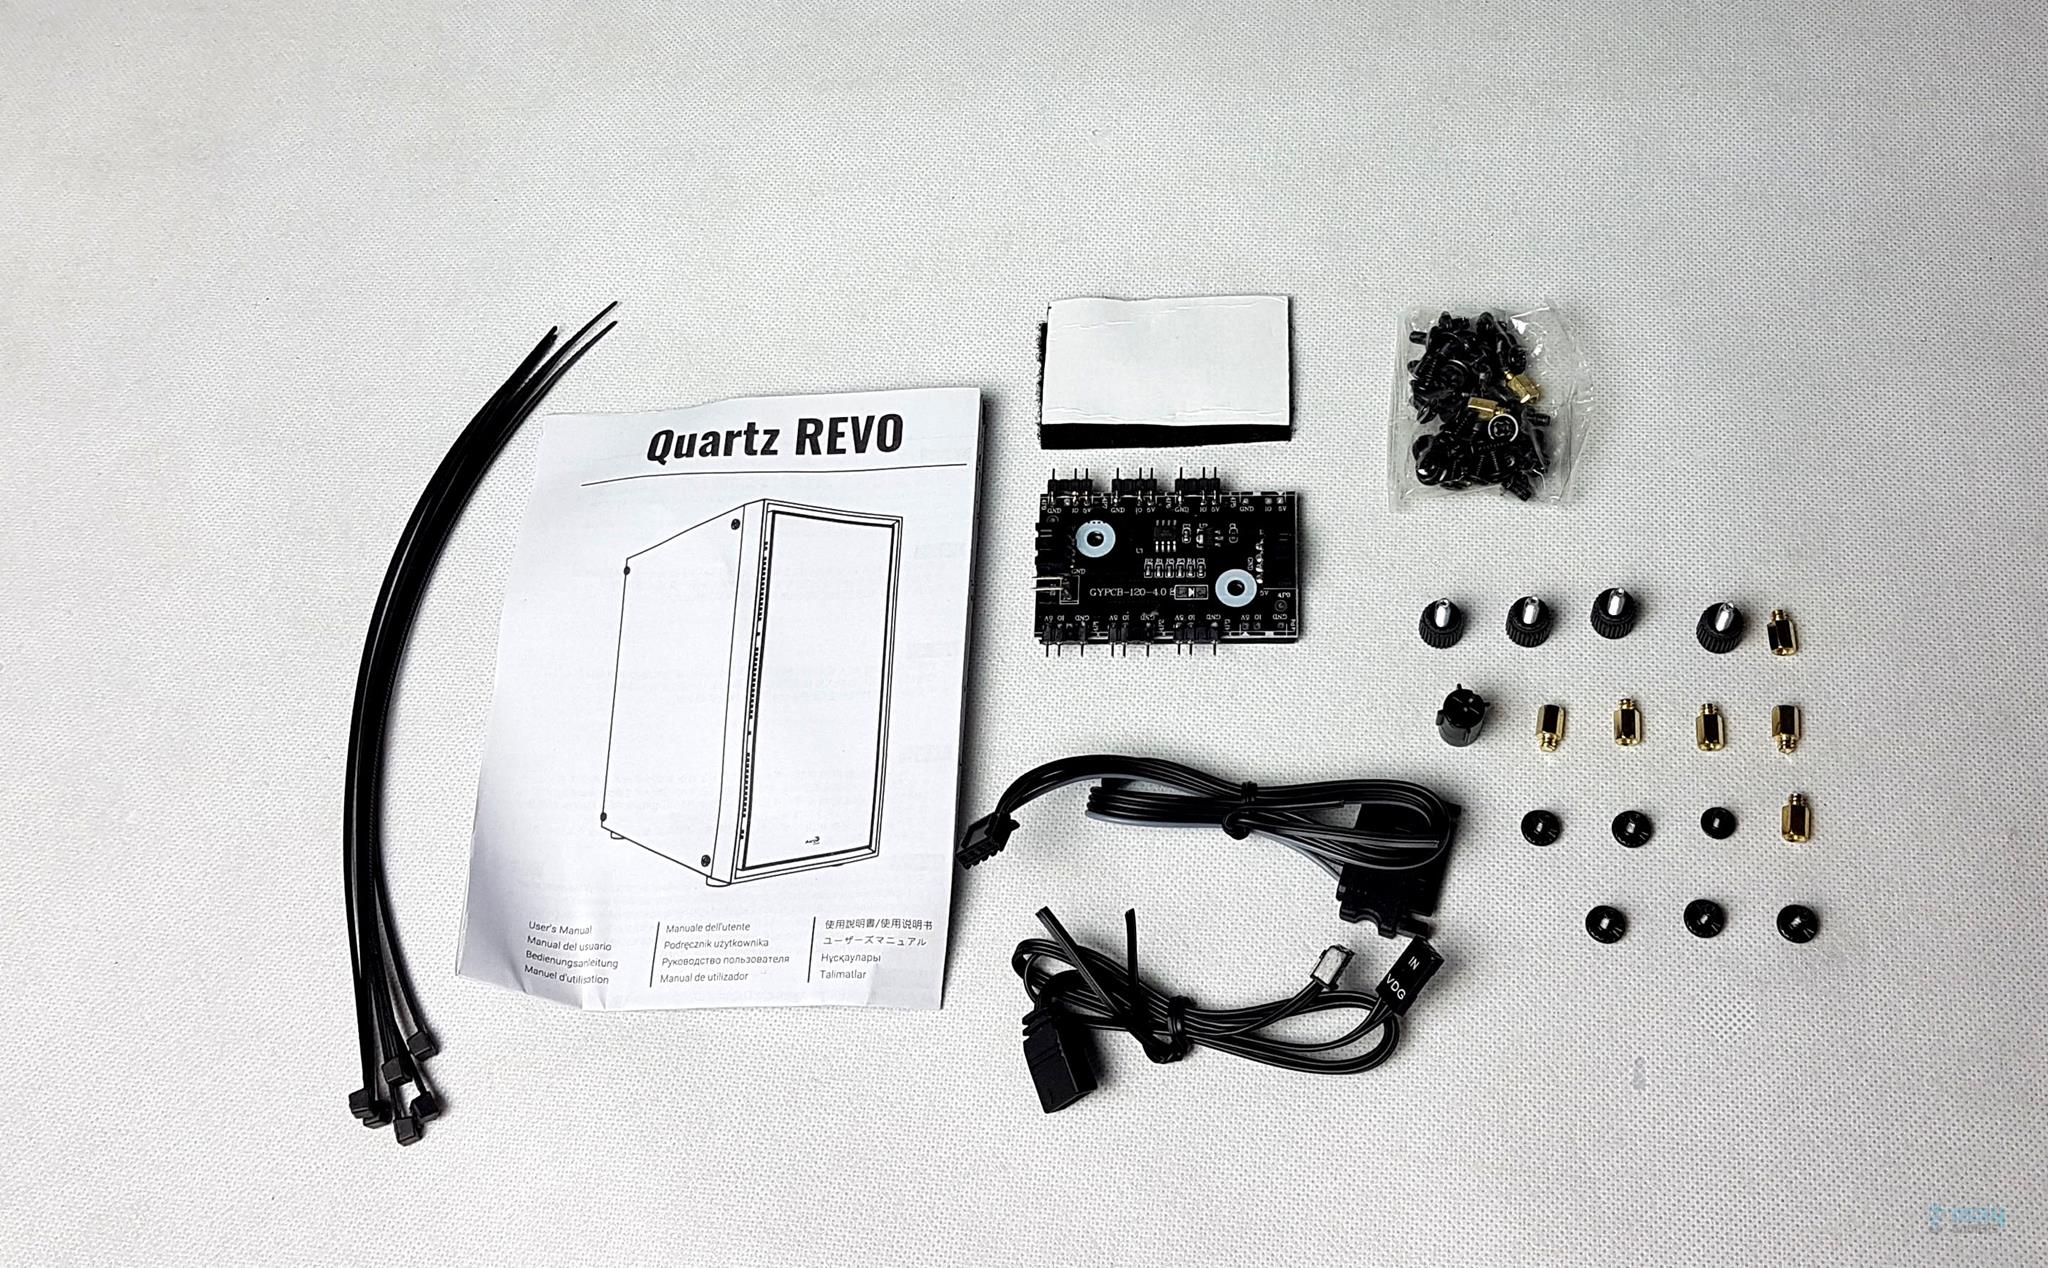  Aerocool Quartz Revo RGB Mid-Tower Chassis — Accessories